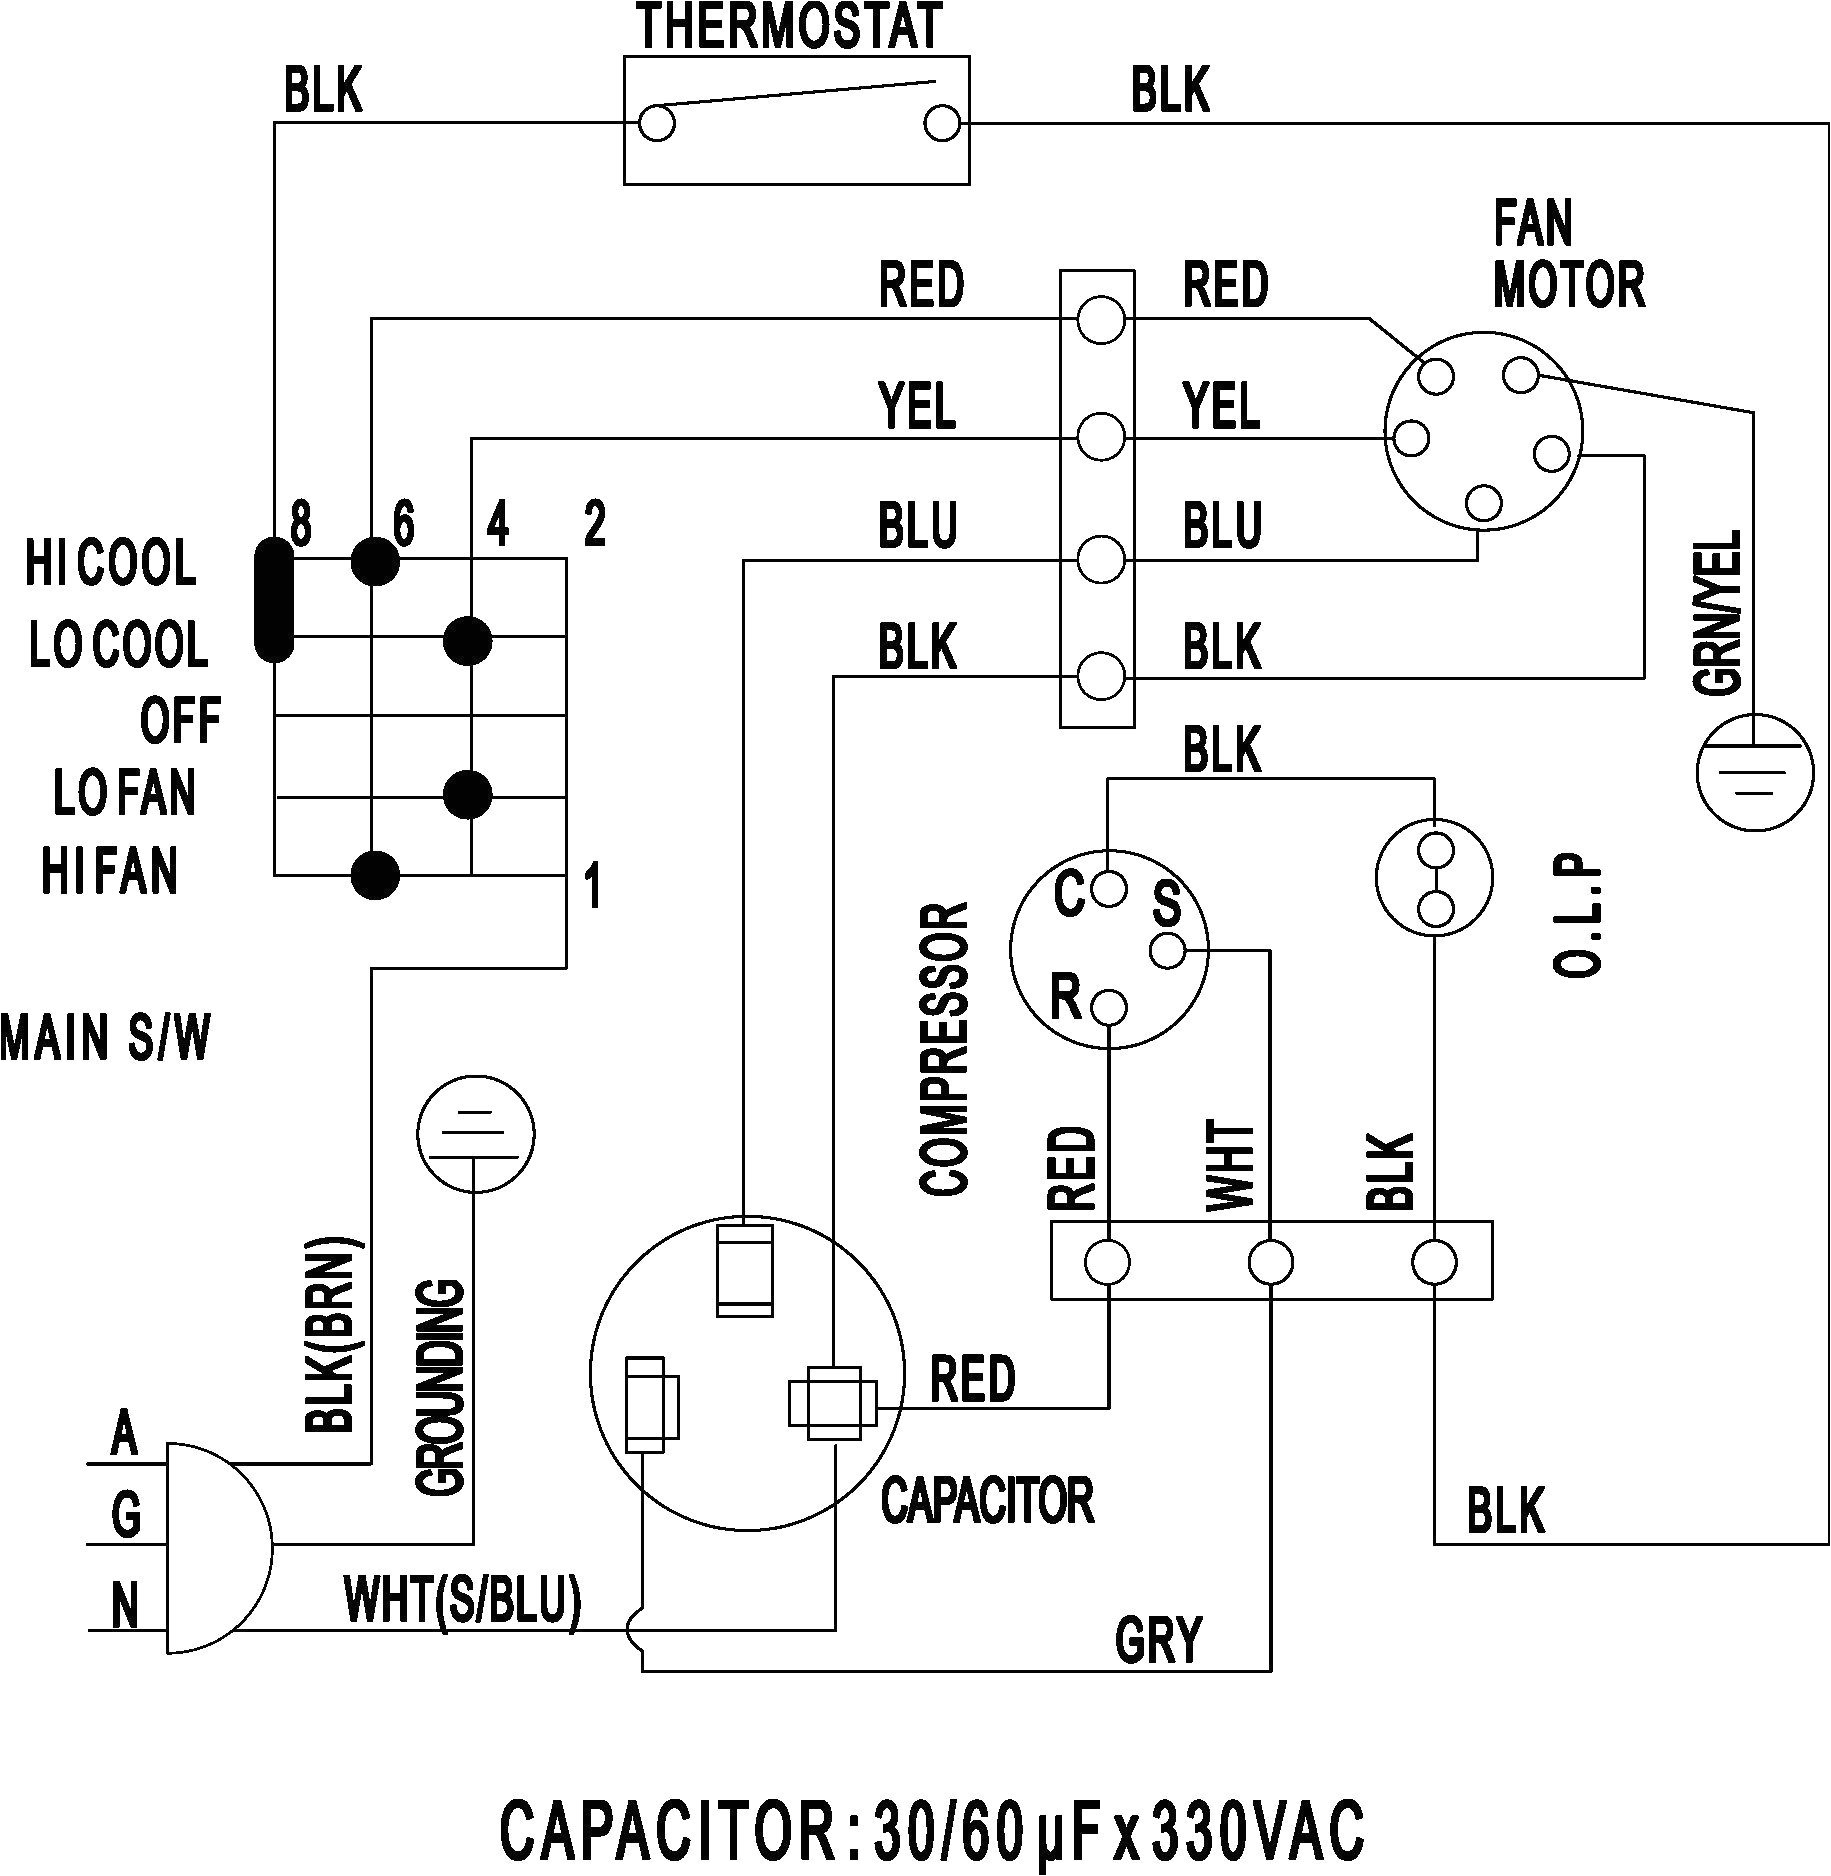 split air conditioner wiring diagram hvac condenser wiring diagram fresh wiring diagram ac split refrence wiring diagram split ac new carrier 19e jpg